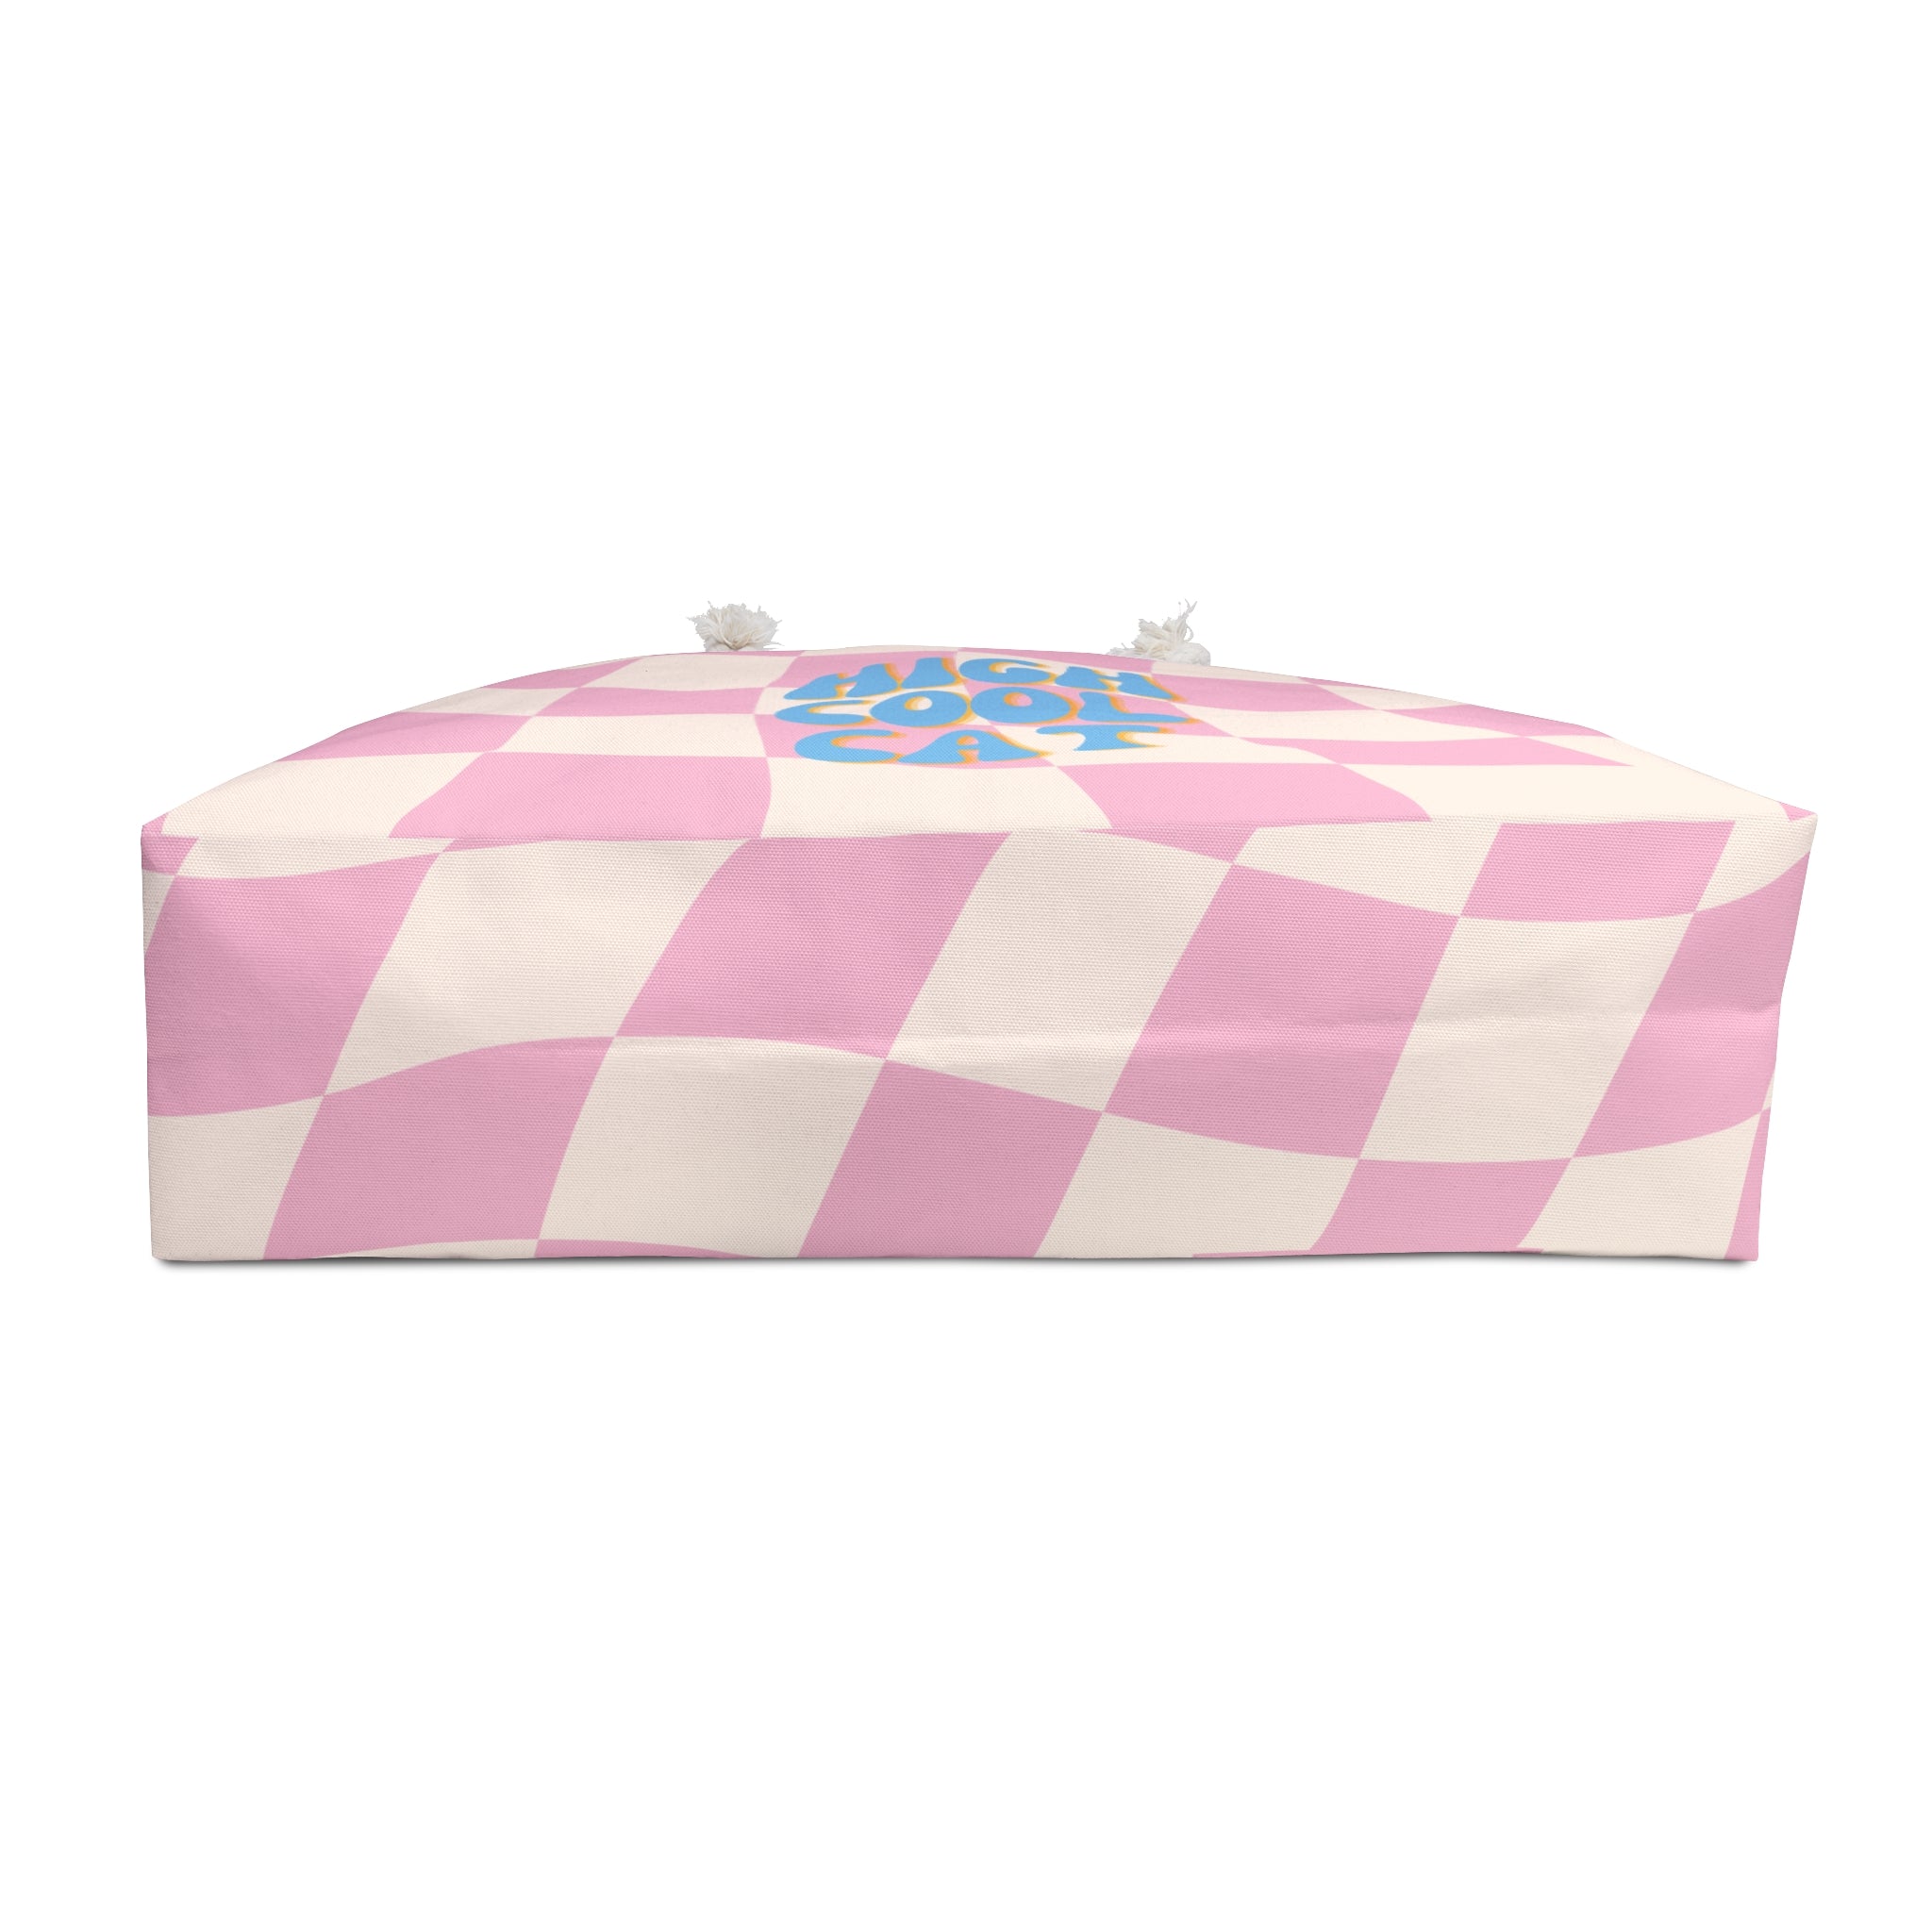 Pink Checkered Highcoolcat Weekender Bag